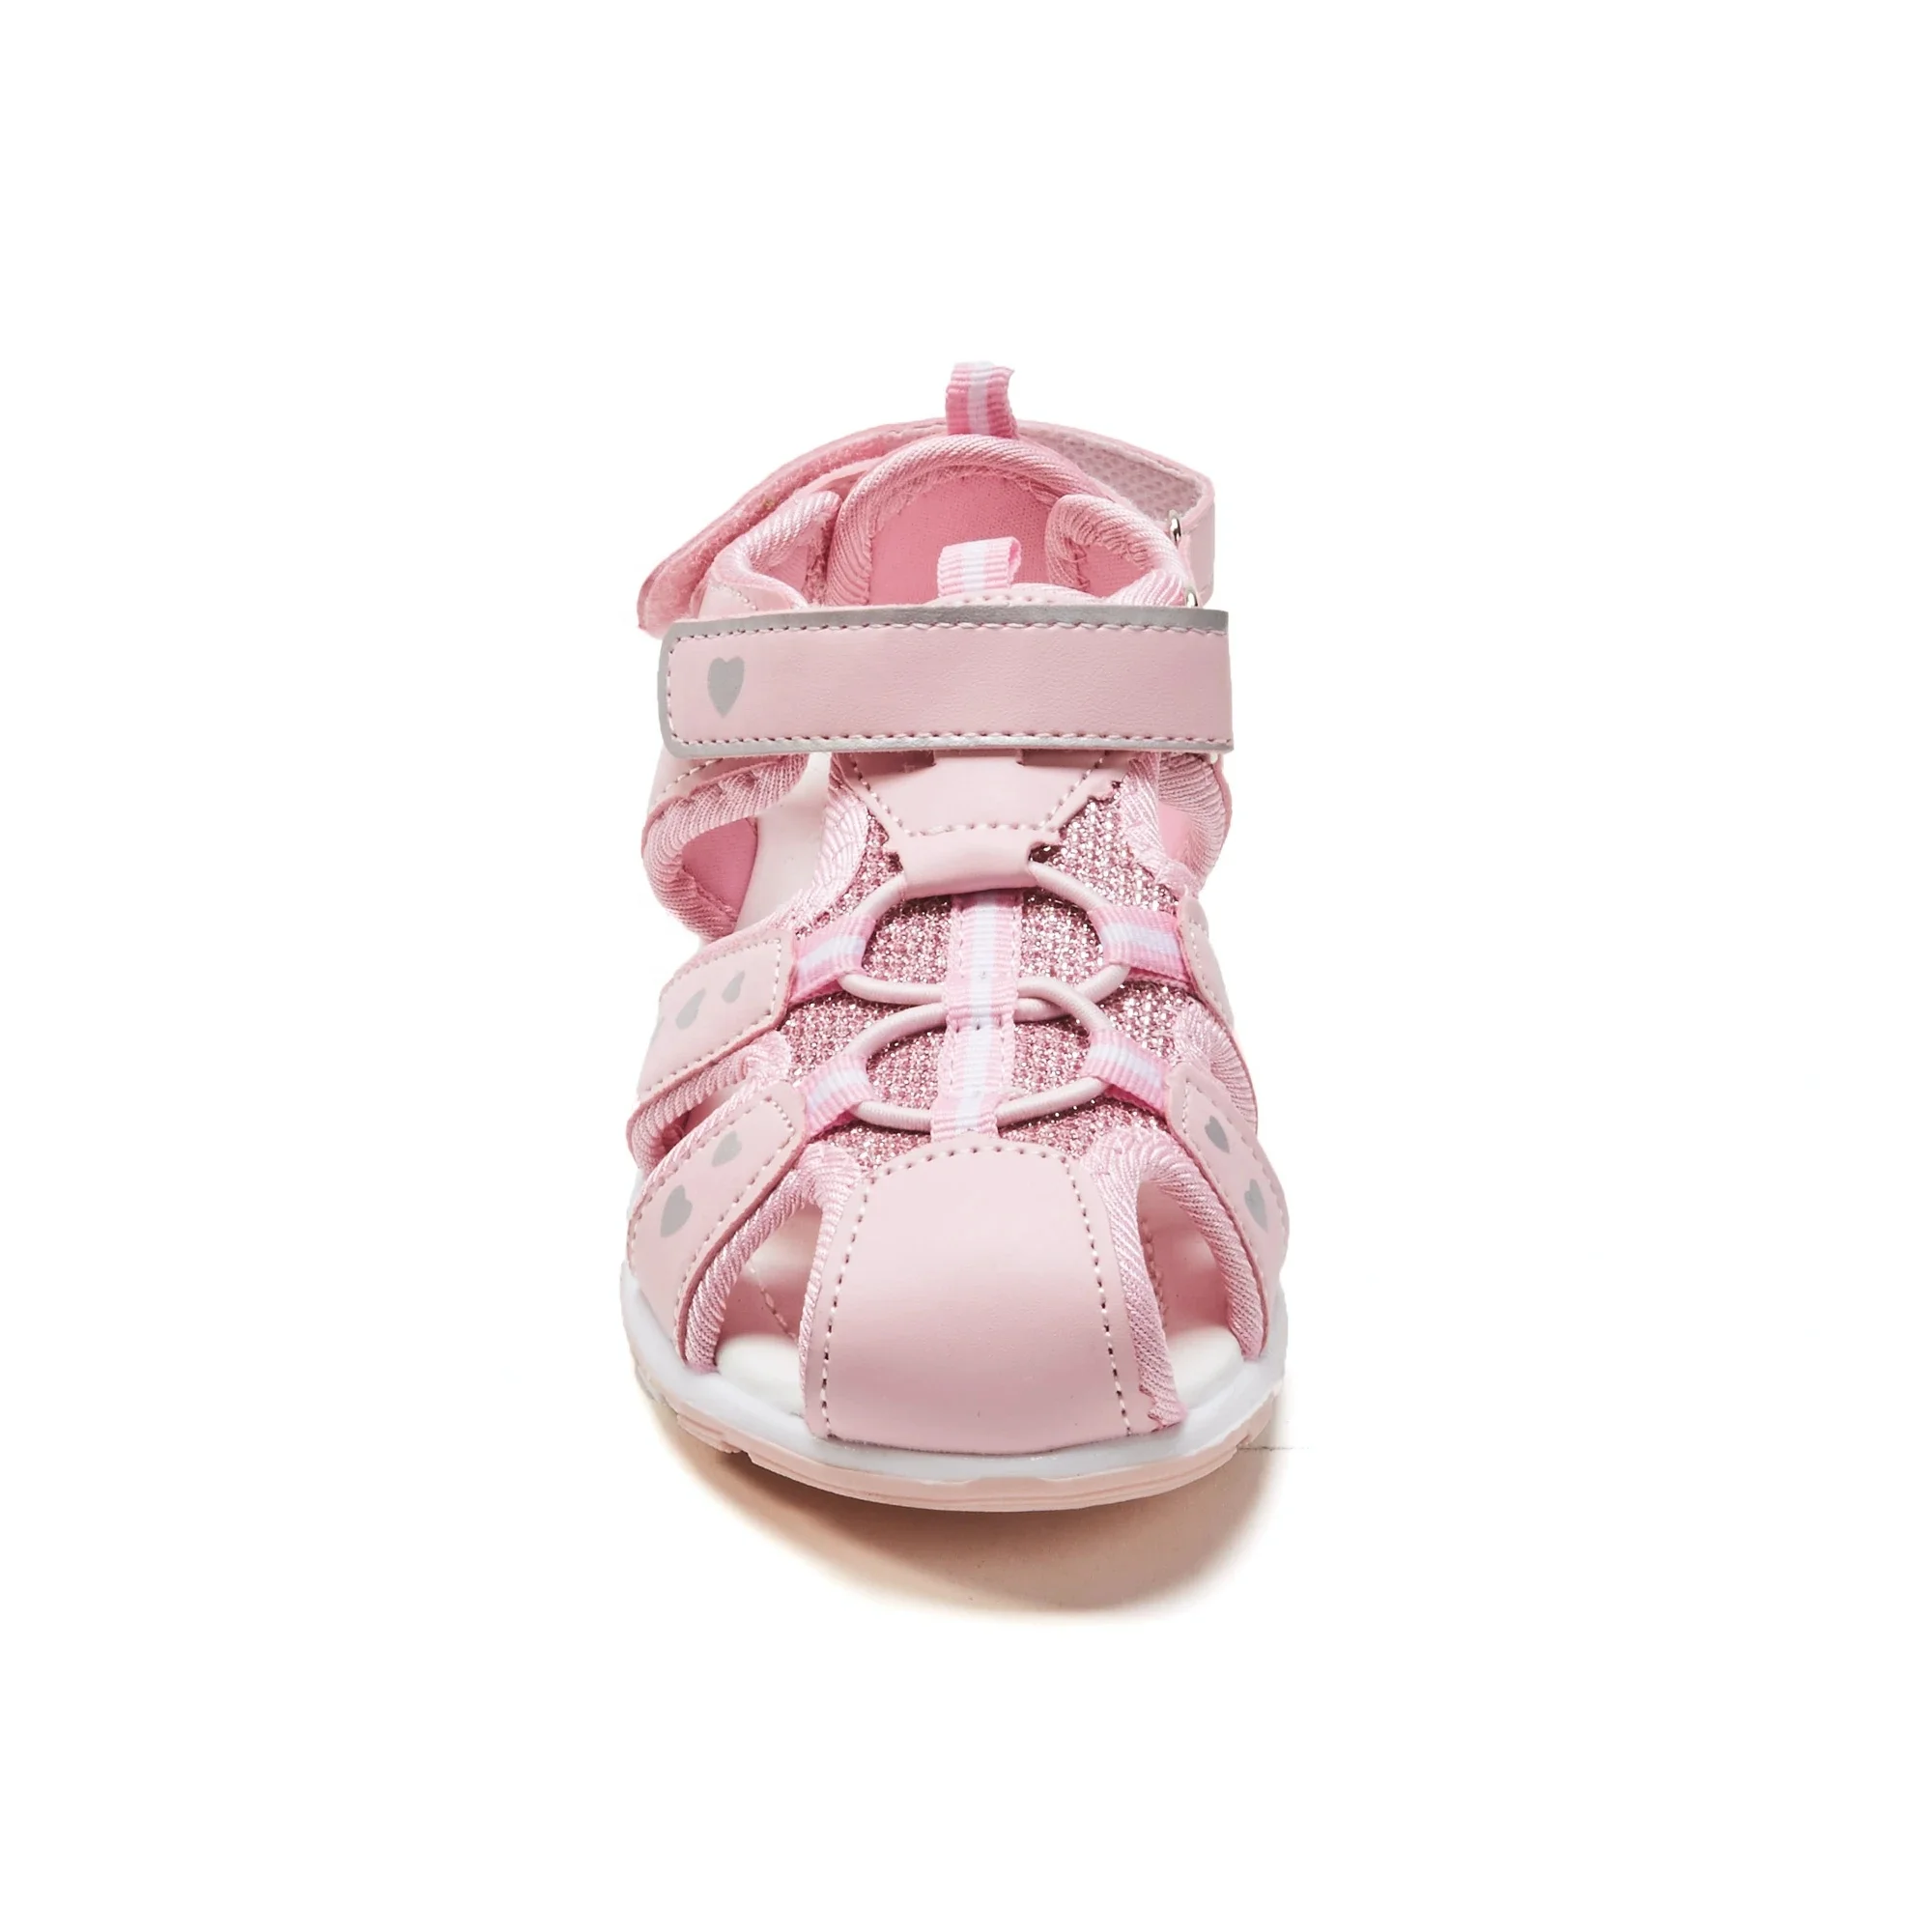 new fashion nice toddler sandals customized kids sandals girls children"e;s sandals